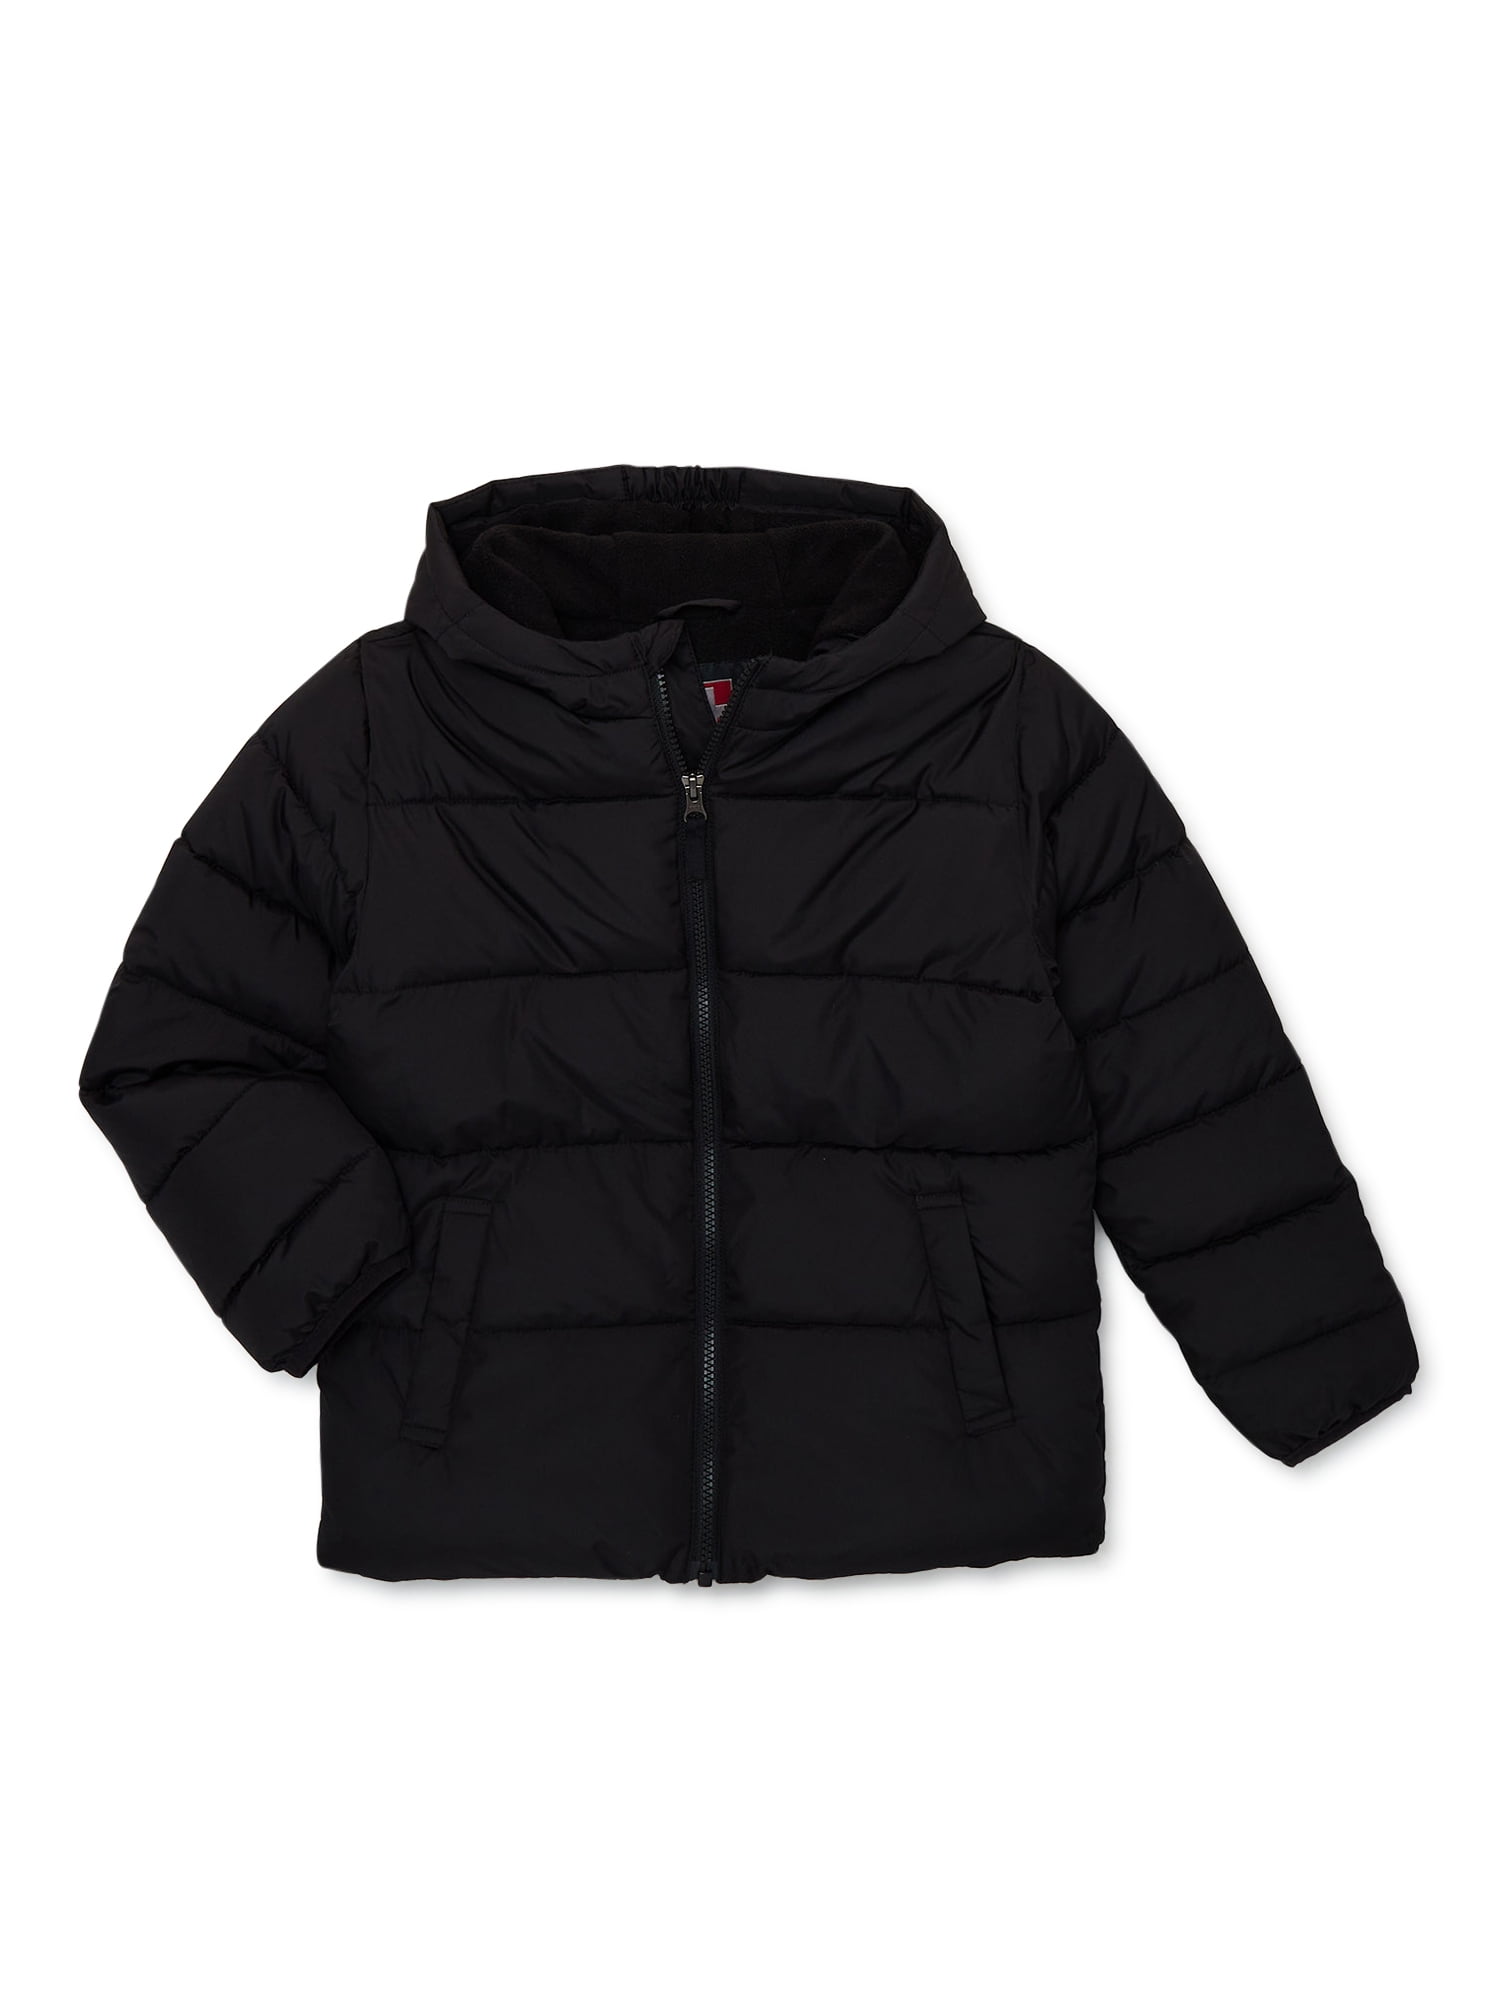 Buy Swiss Tech Boys Winter Puffer Jacket with Hood, Sizes 4-18 & Husky ...